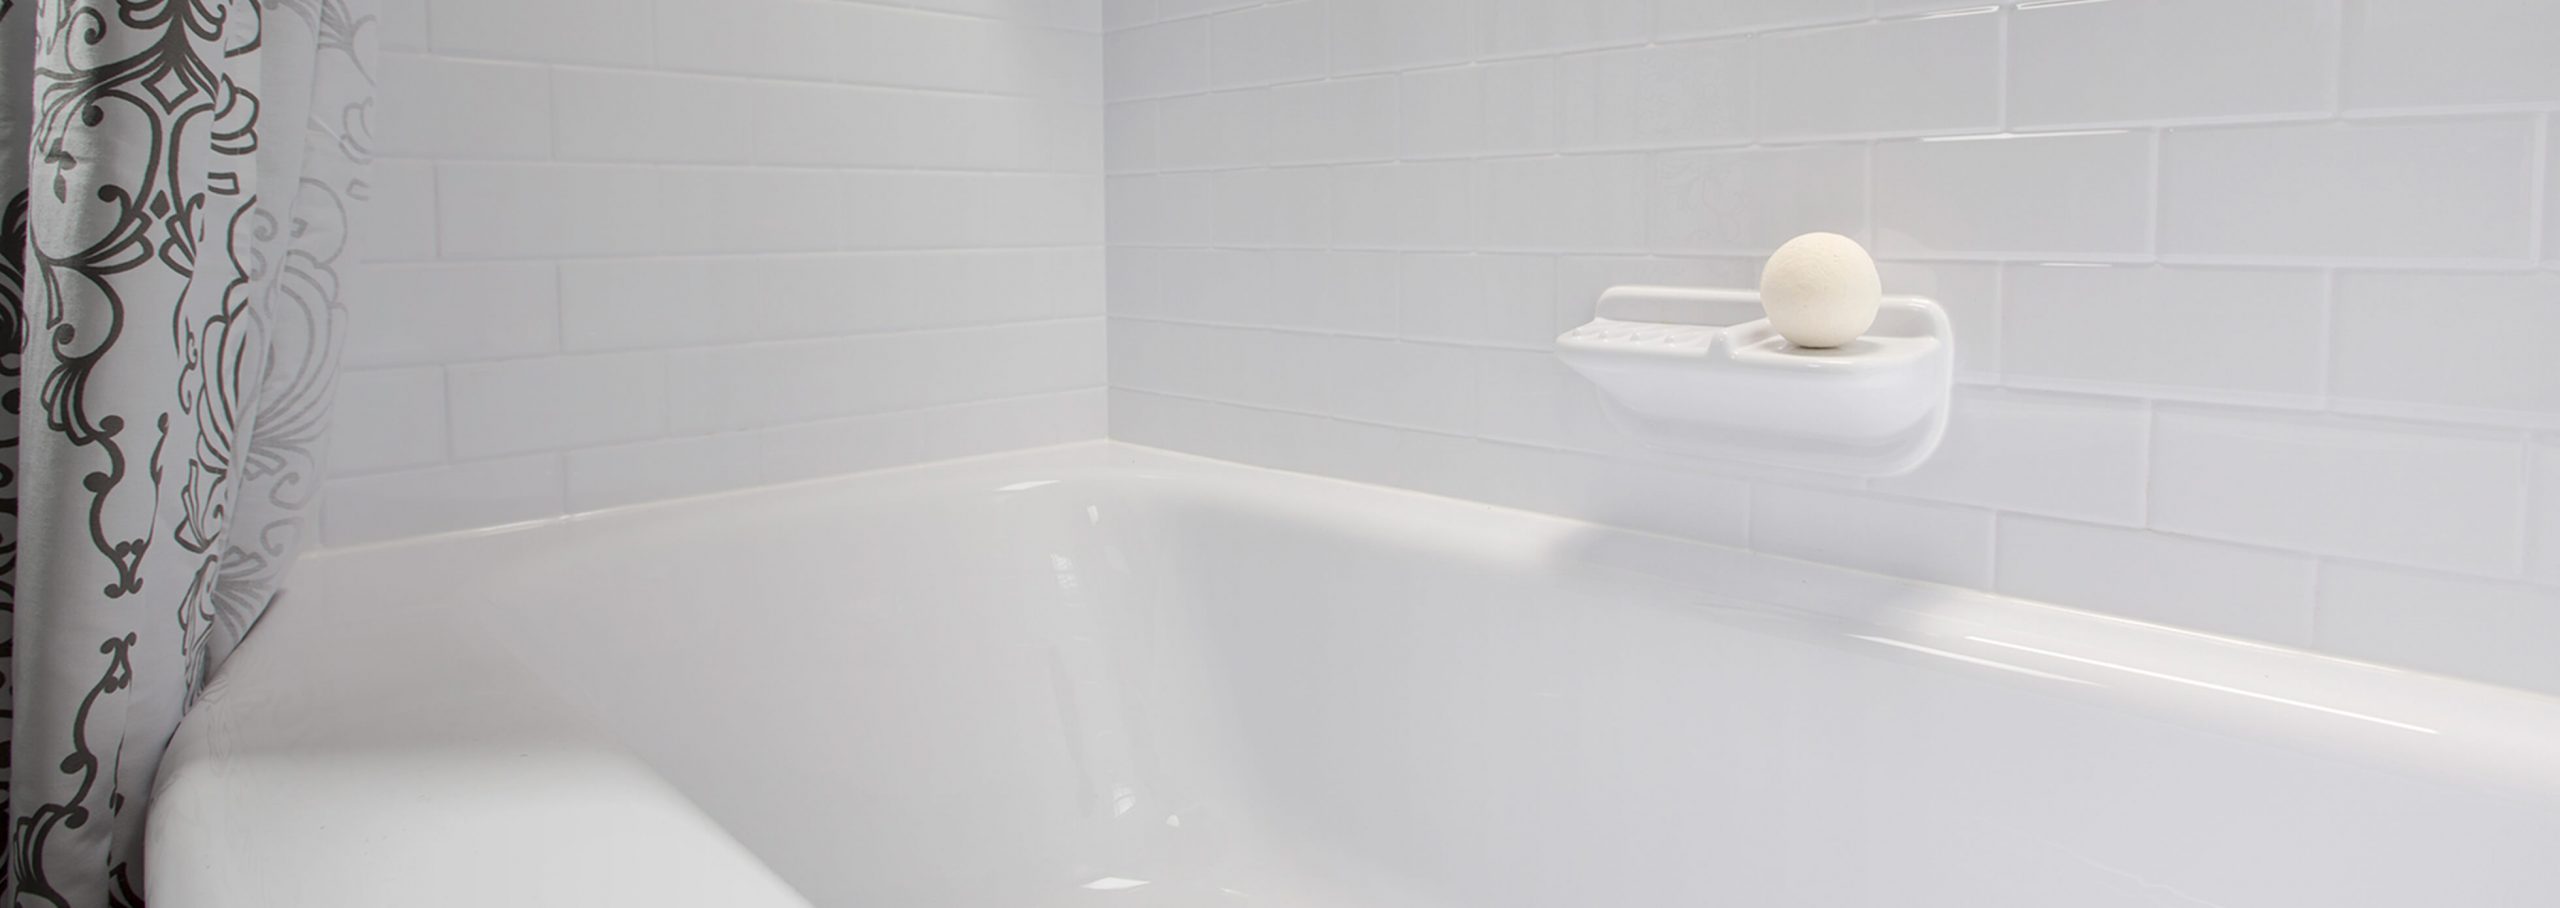 Bathroom Almond White Soap Holder Dish Wall Accessory Shelf Shower Tub Bath Tile 